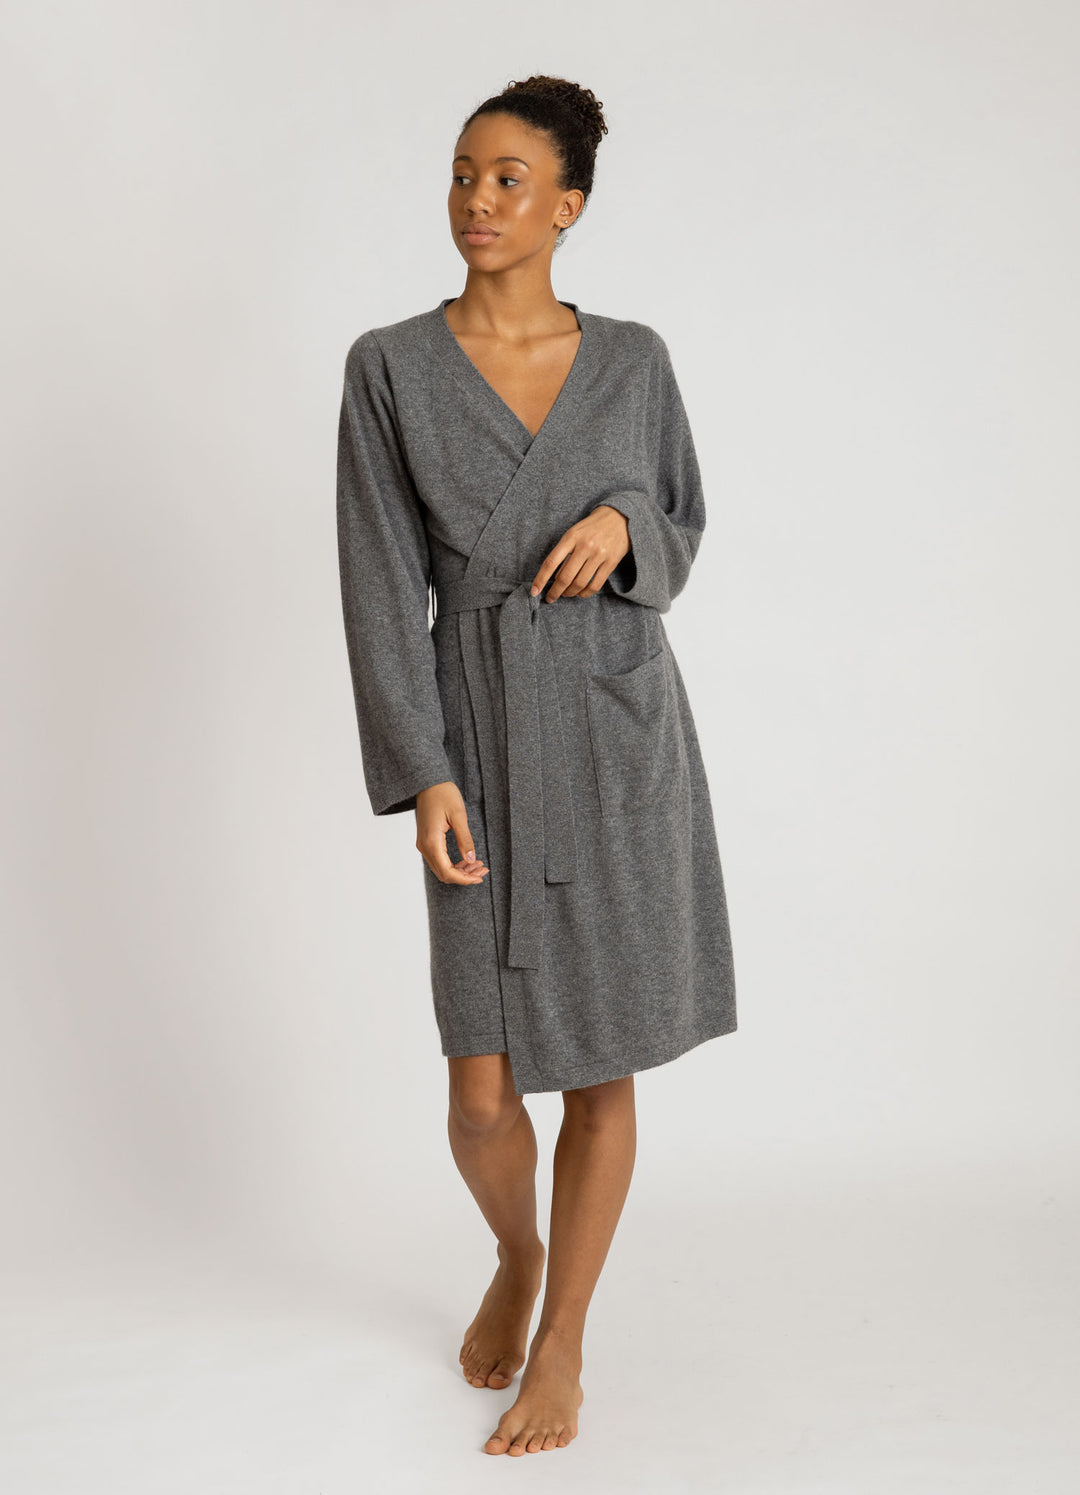 Morning robe Classic in 100% cashmere by Kashmina. Scandinavian design. Color: dark grey.